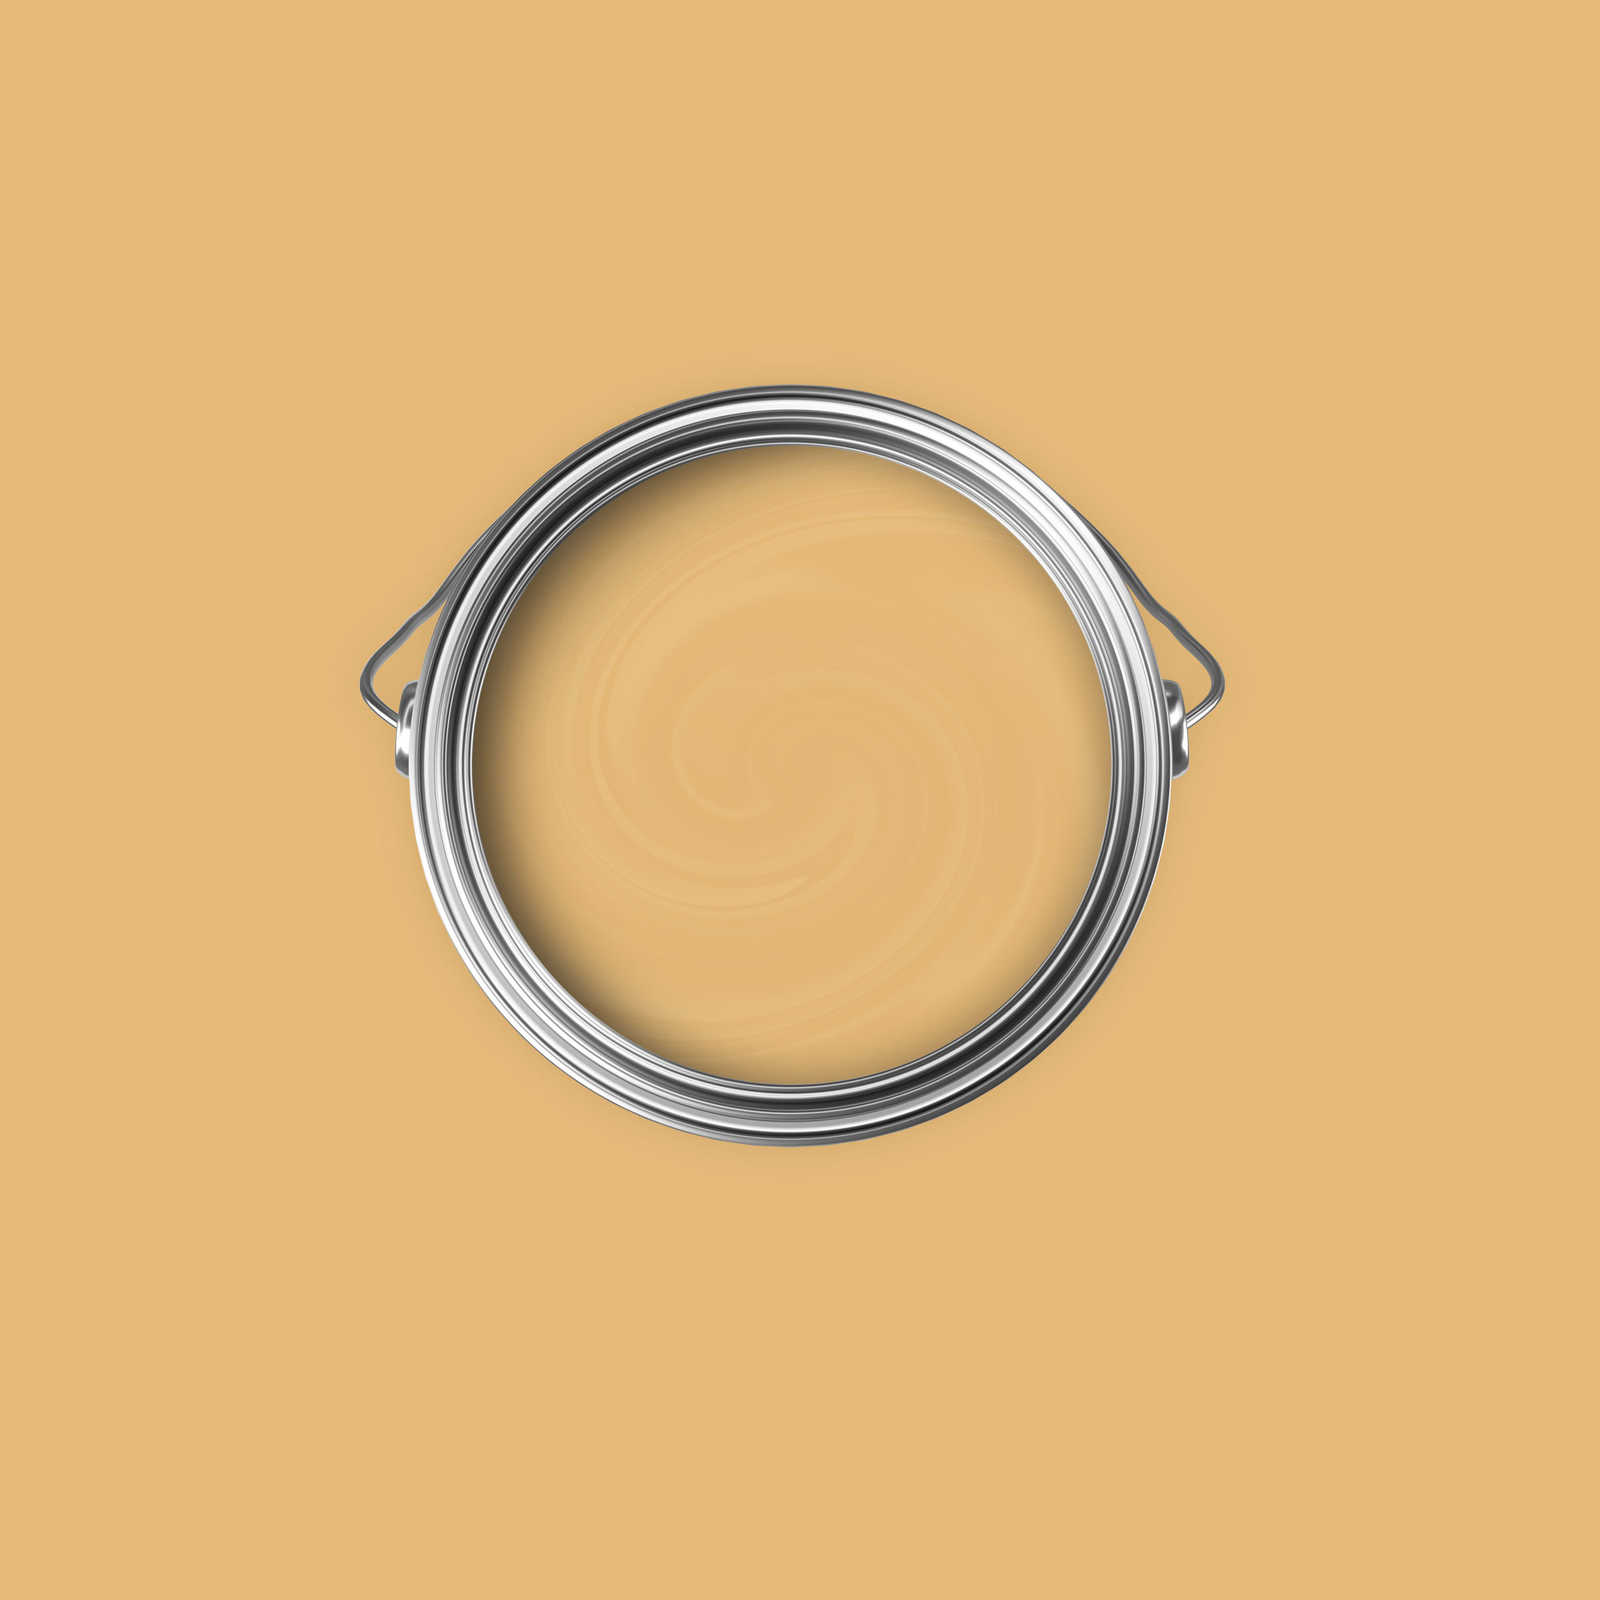             Premium Wall Paint Wake Up Mustard Yellow »Beige Orange/Sassy Saffron« NW811 – 2.5 litre
        